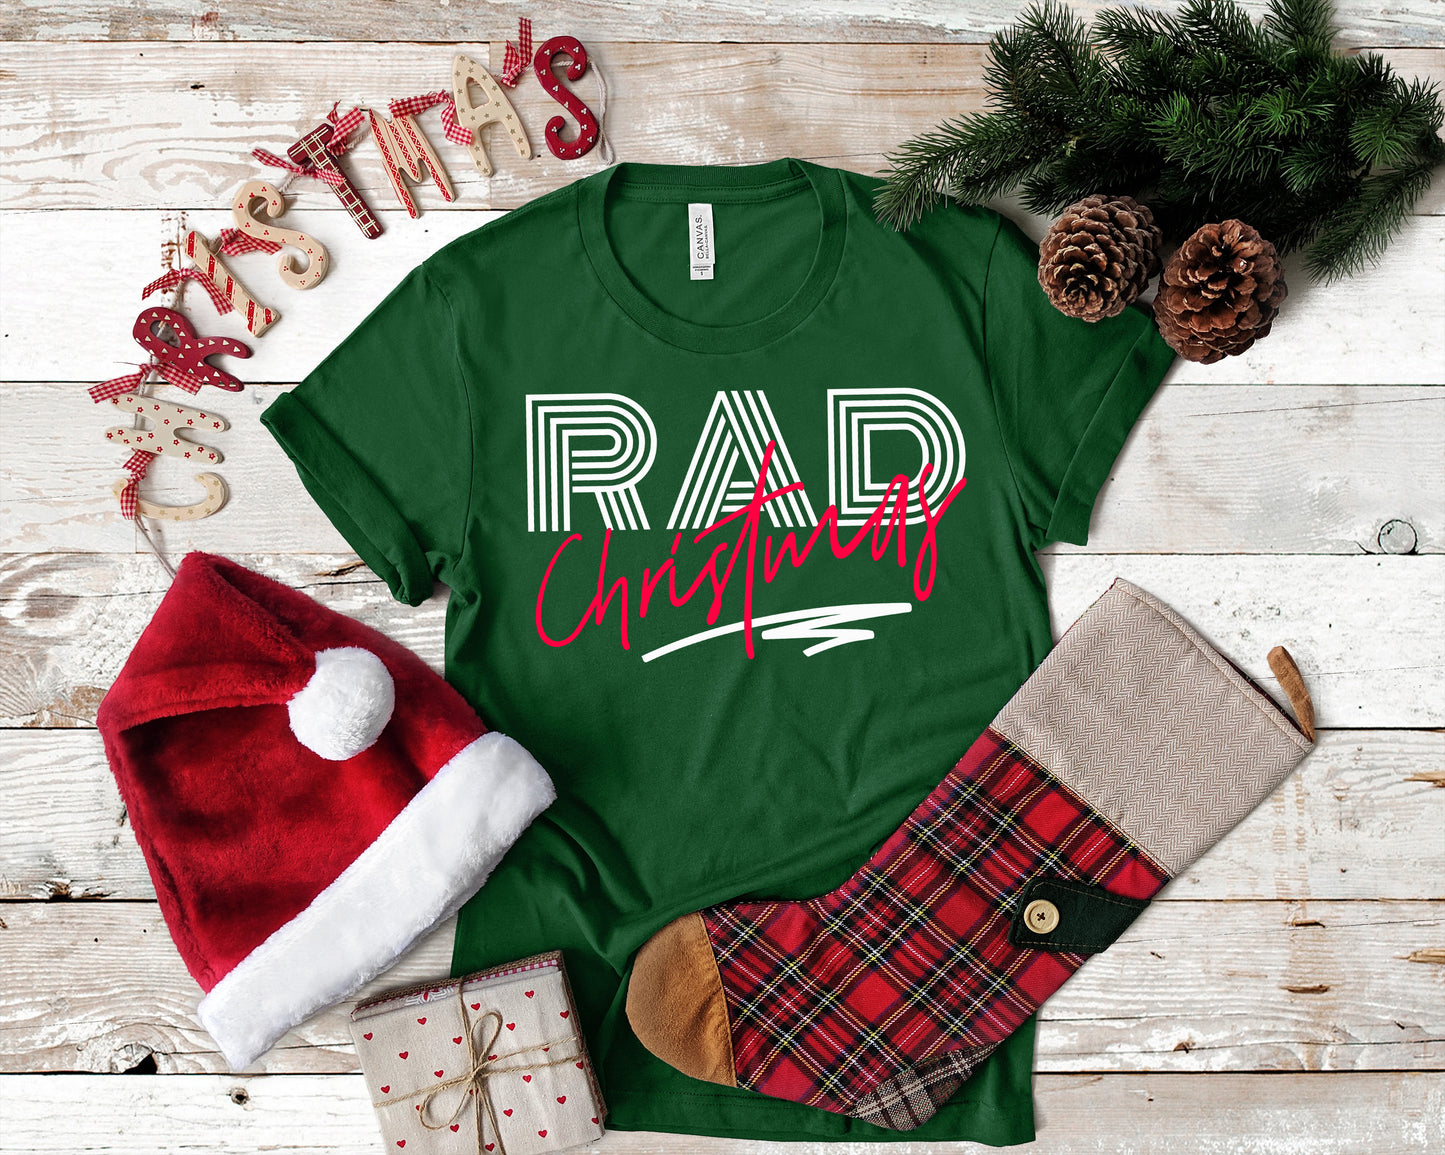 Have a RAD Christmas!